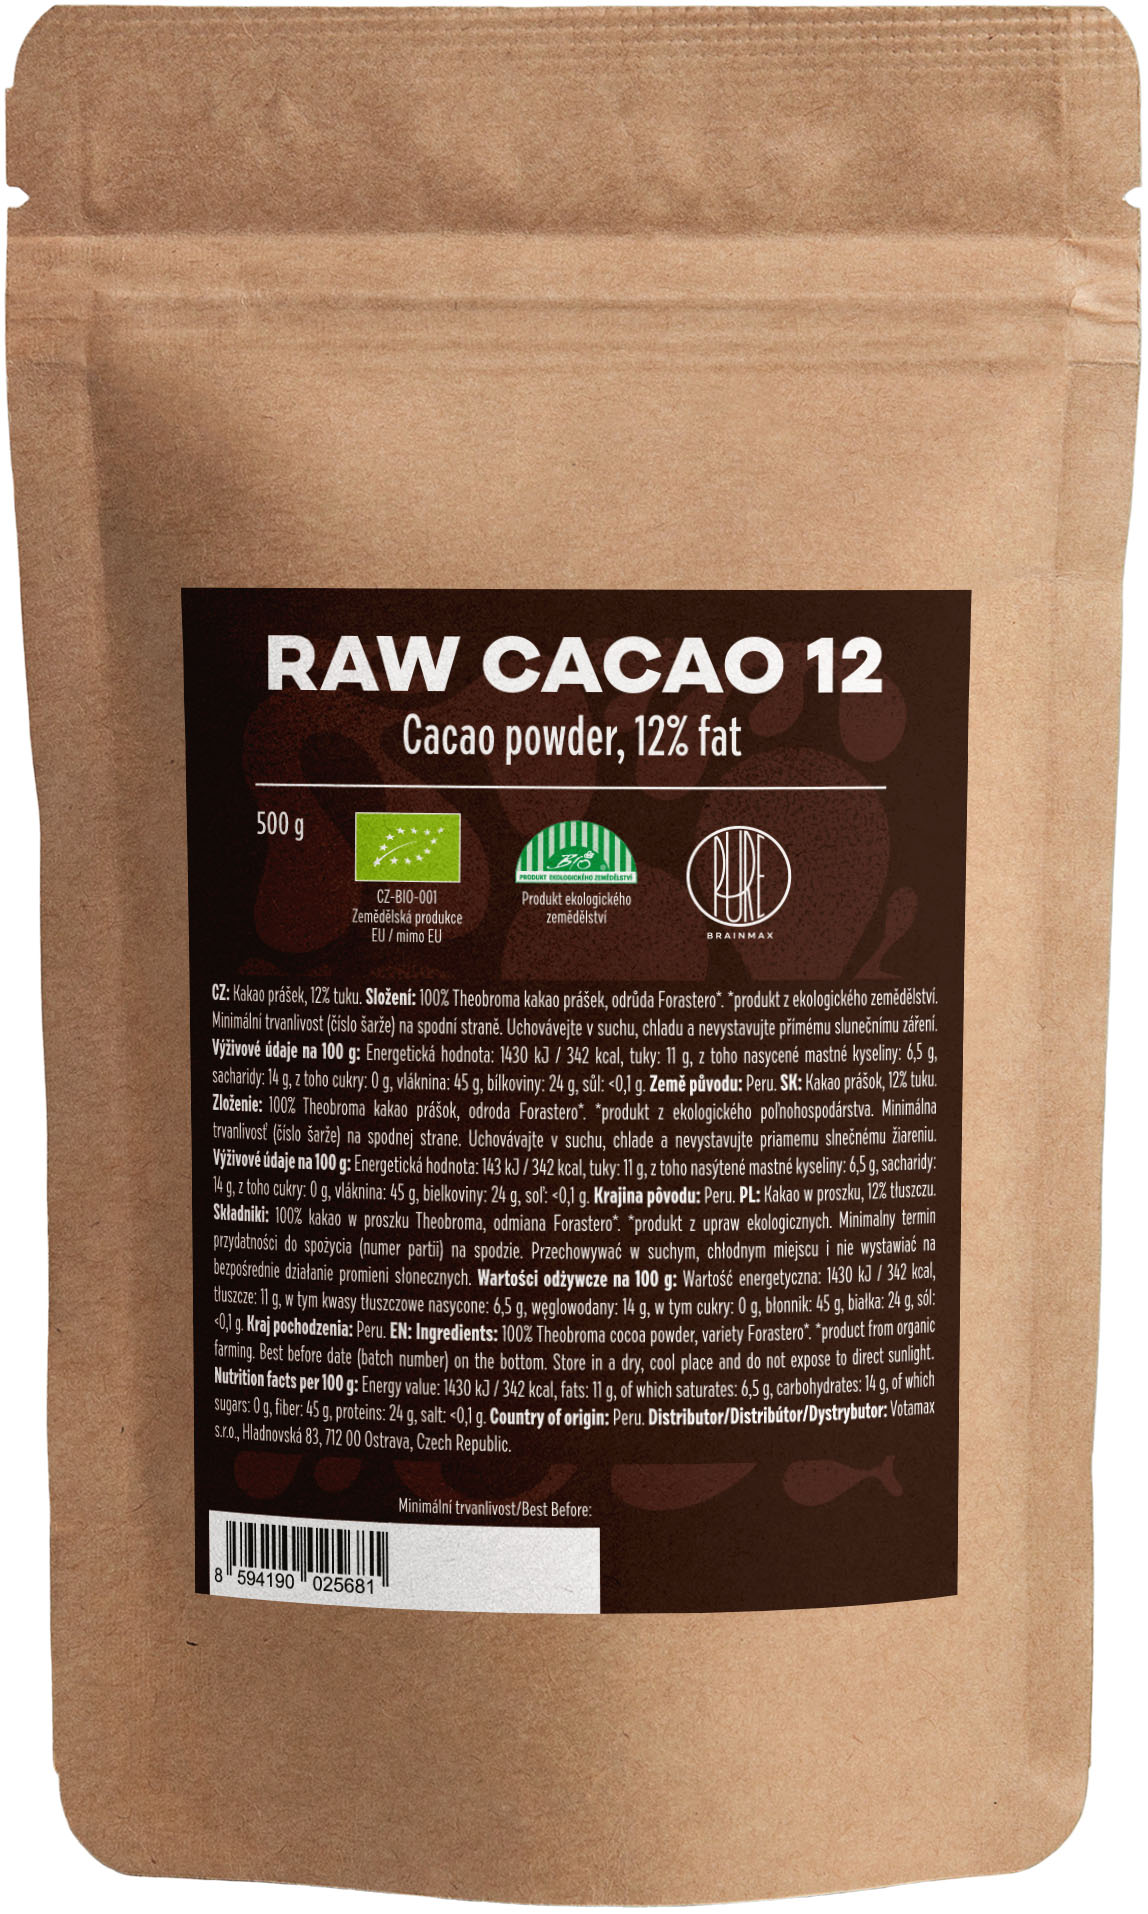 Levně BrainMax Pure Raw Cacao 12, BIO 500 g *CZ-BIO-001 certifikát